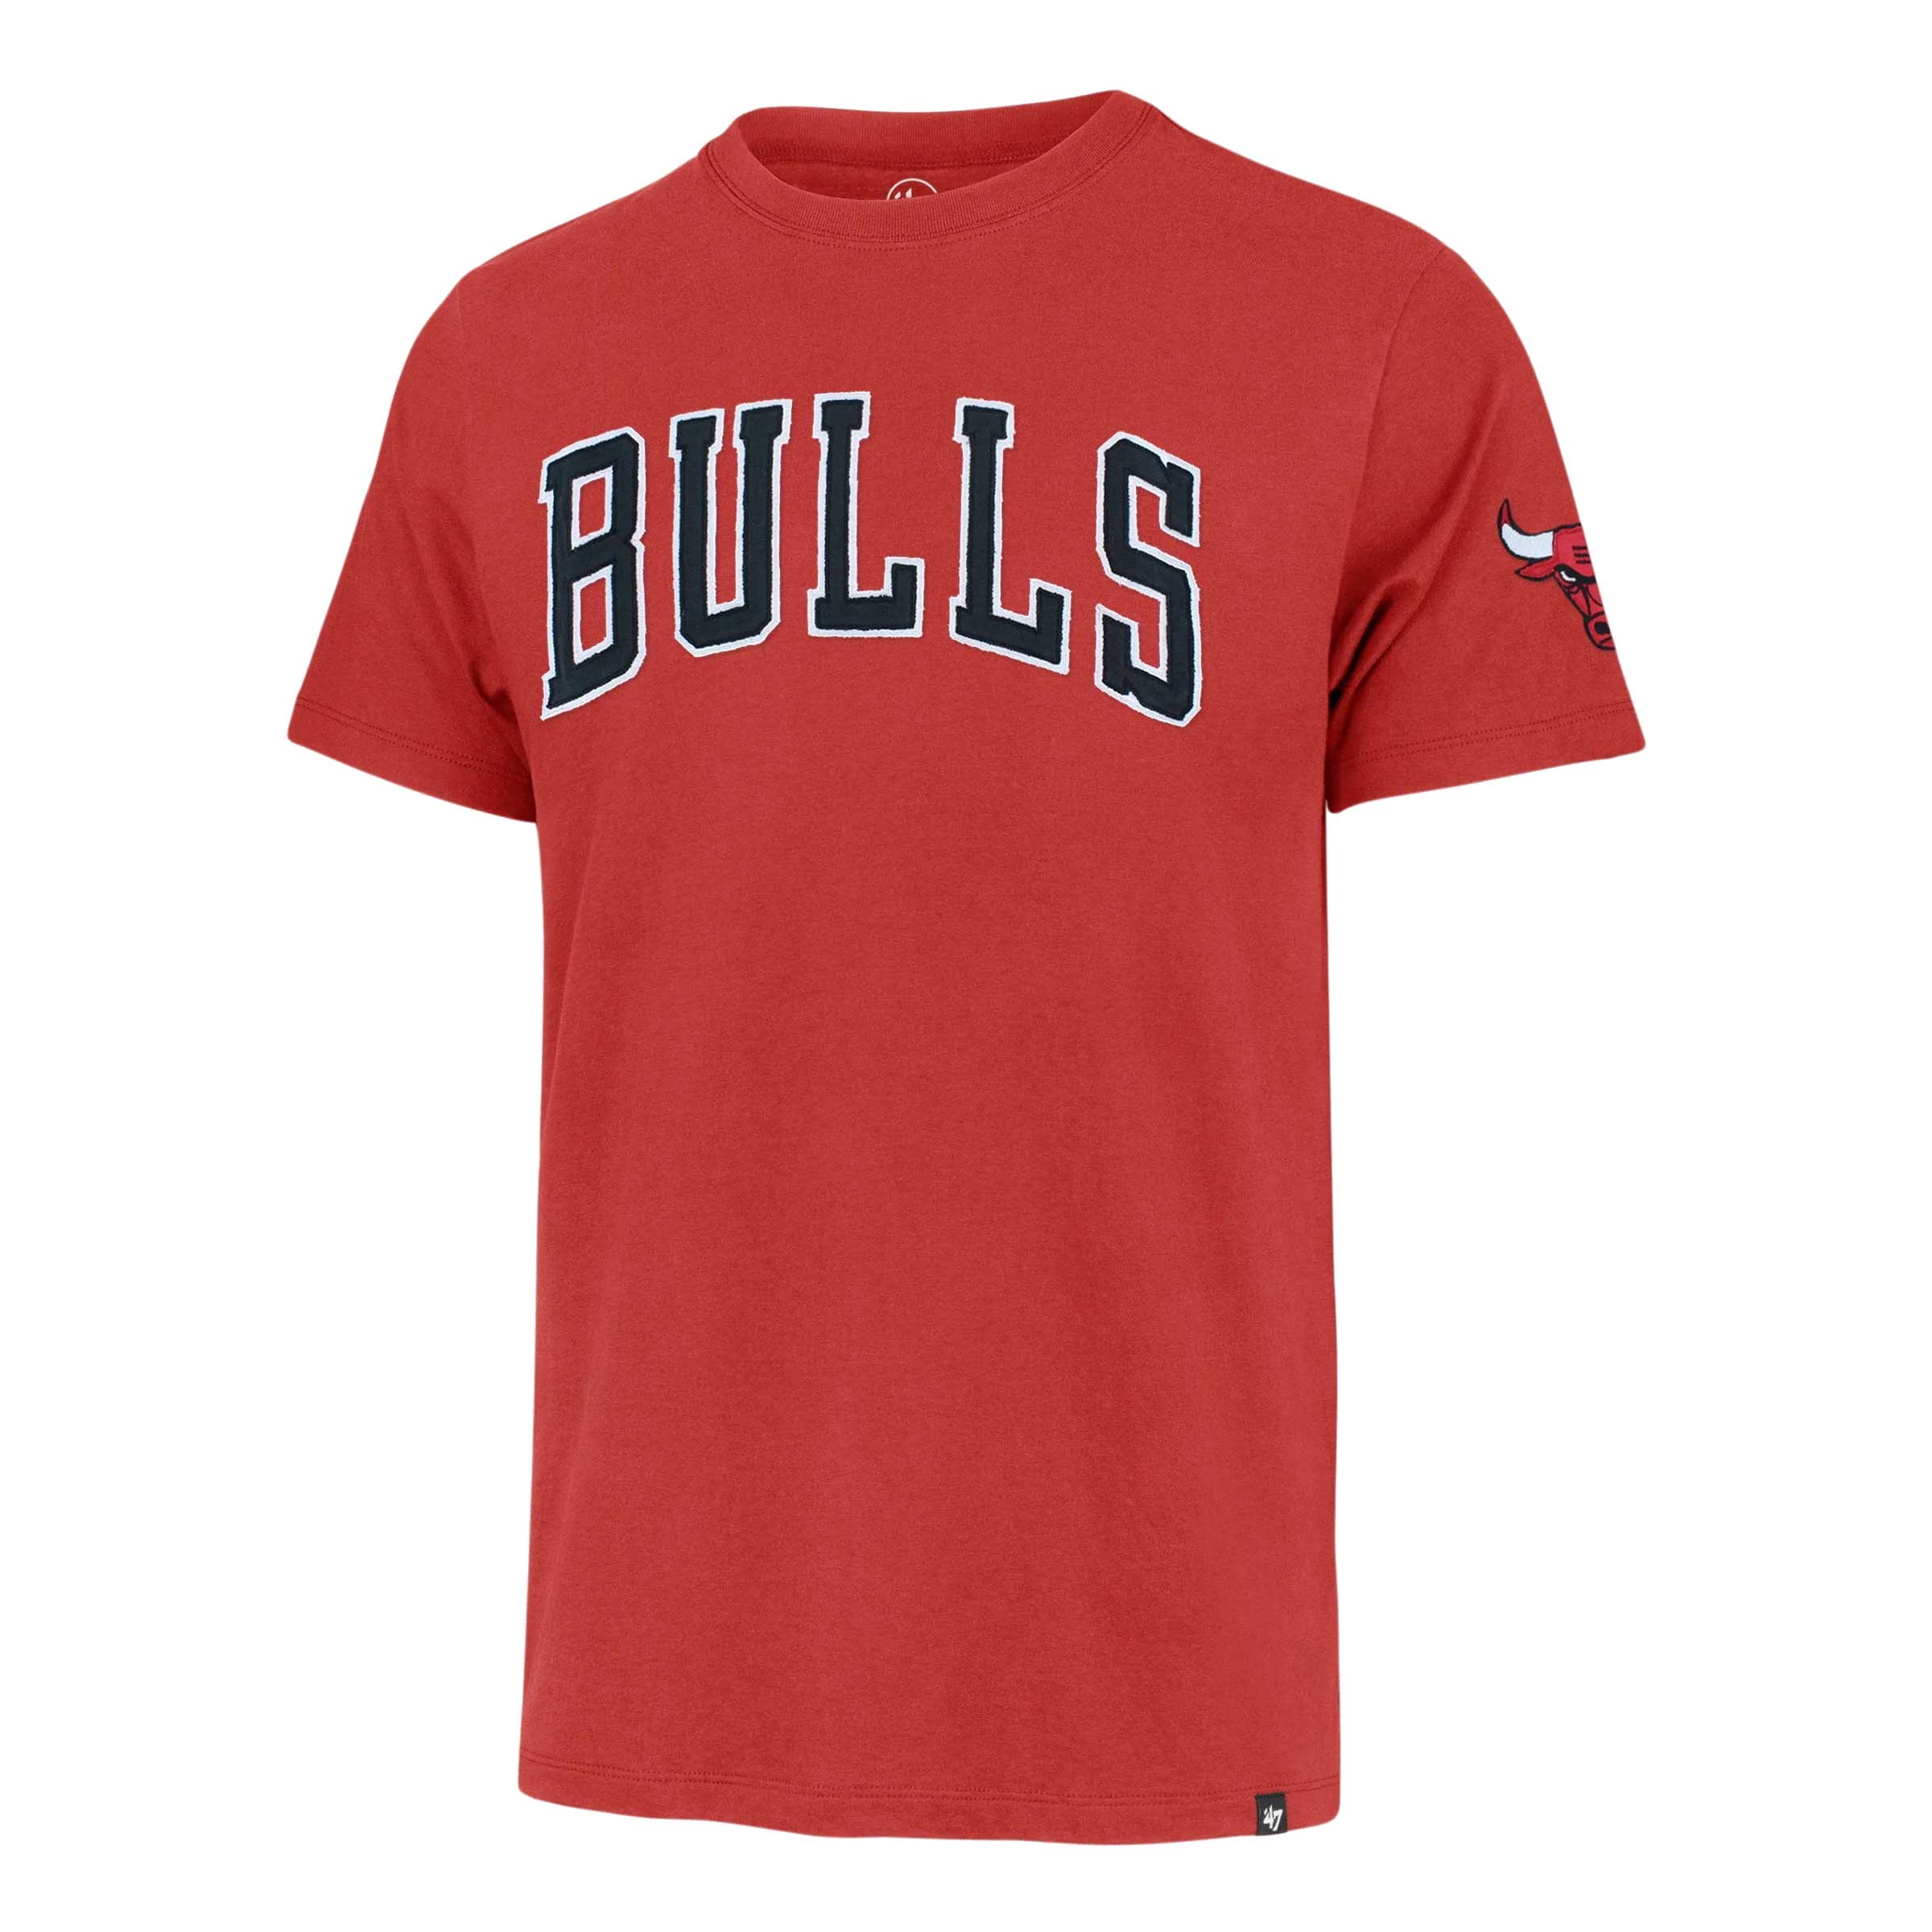 bulls tshirt jersey